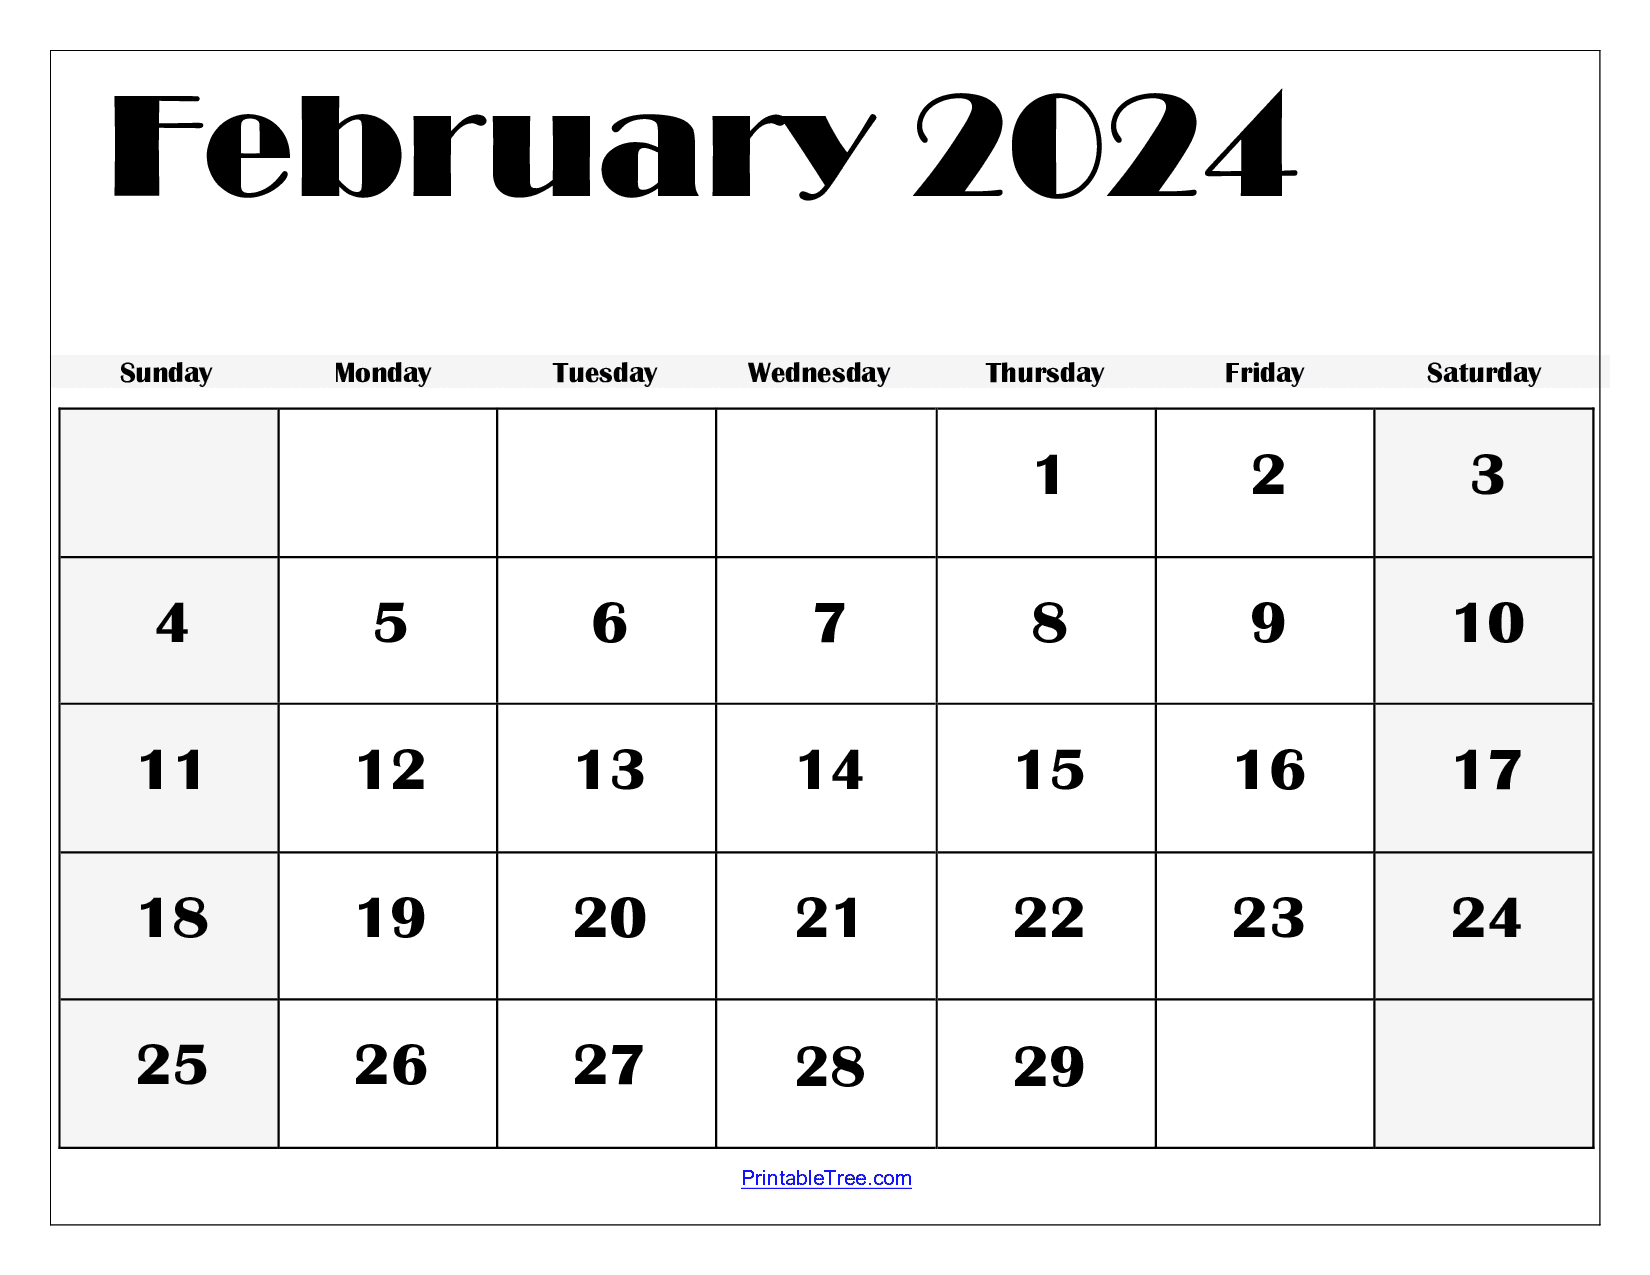 February 2024 Calendar Printable Pdf Template With Holidays for Blank Calendar Feb 2024 Printable